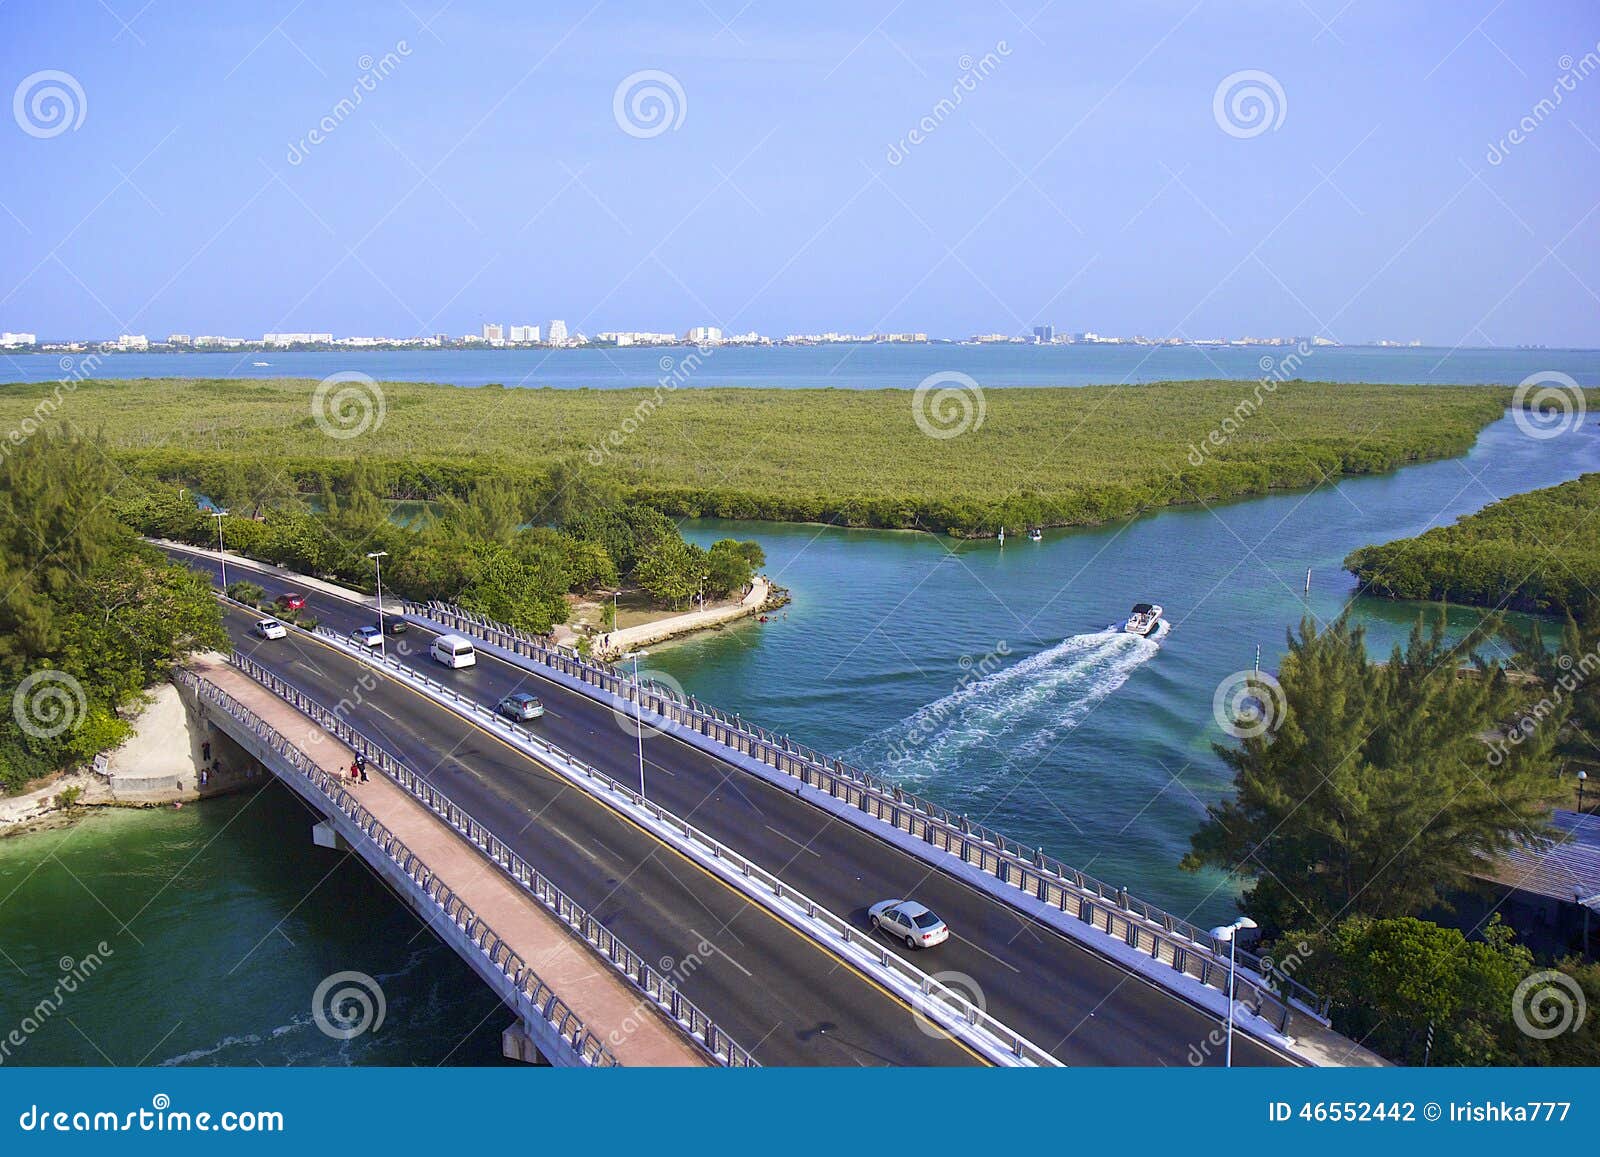 lagune quintana roo , cancun, mexico